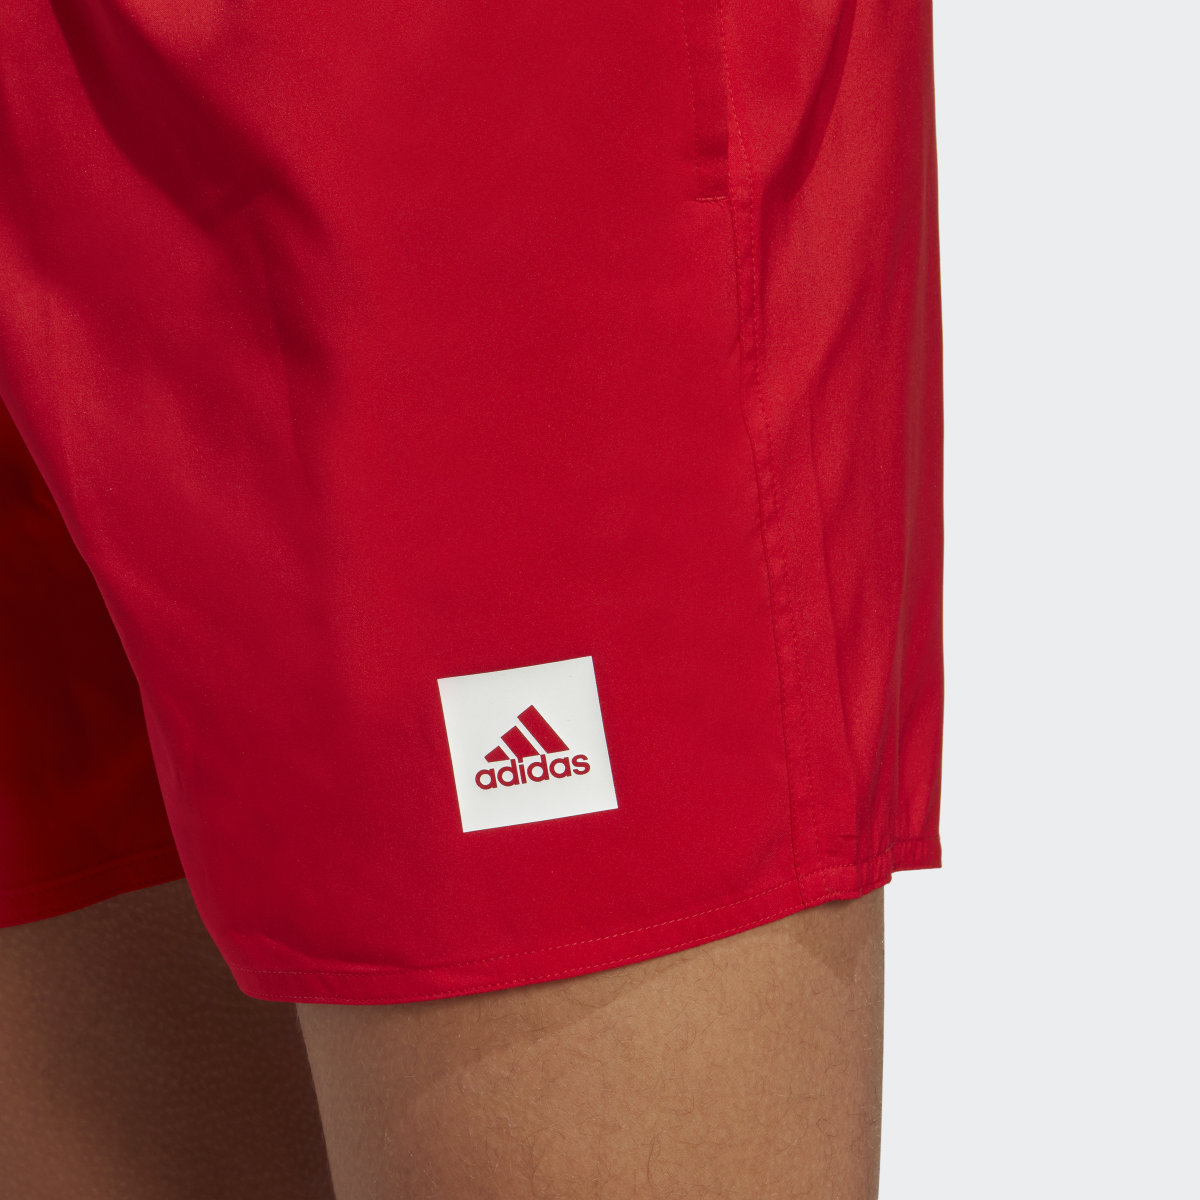 Adidas Short Length Solid Swim Shorts. 6